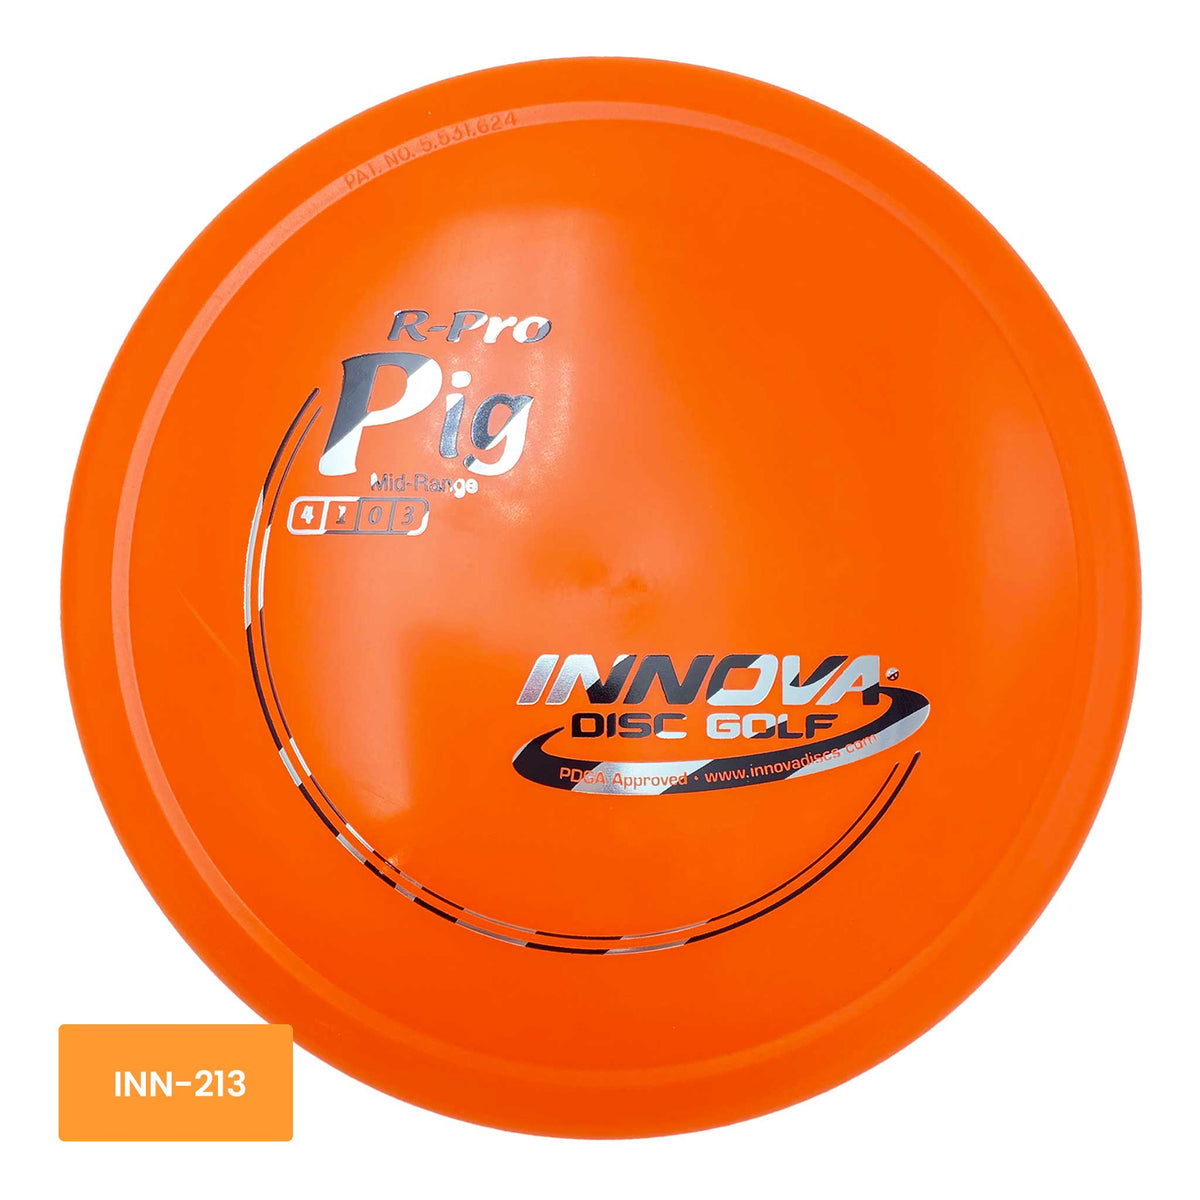 Innova Disc Golf R-Pro Pig putter and approach - Orange